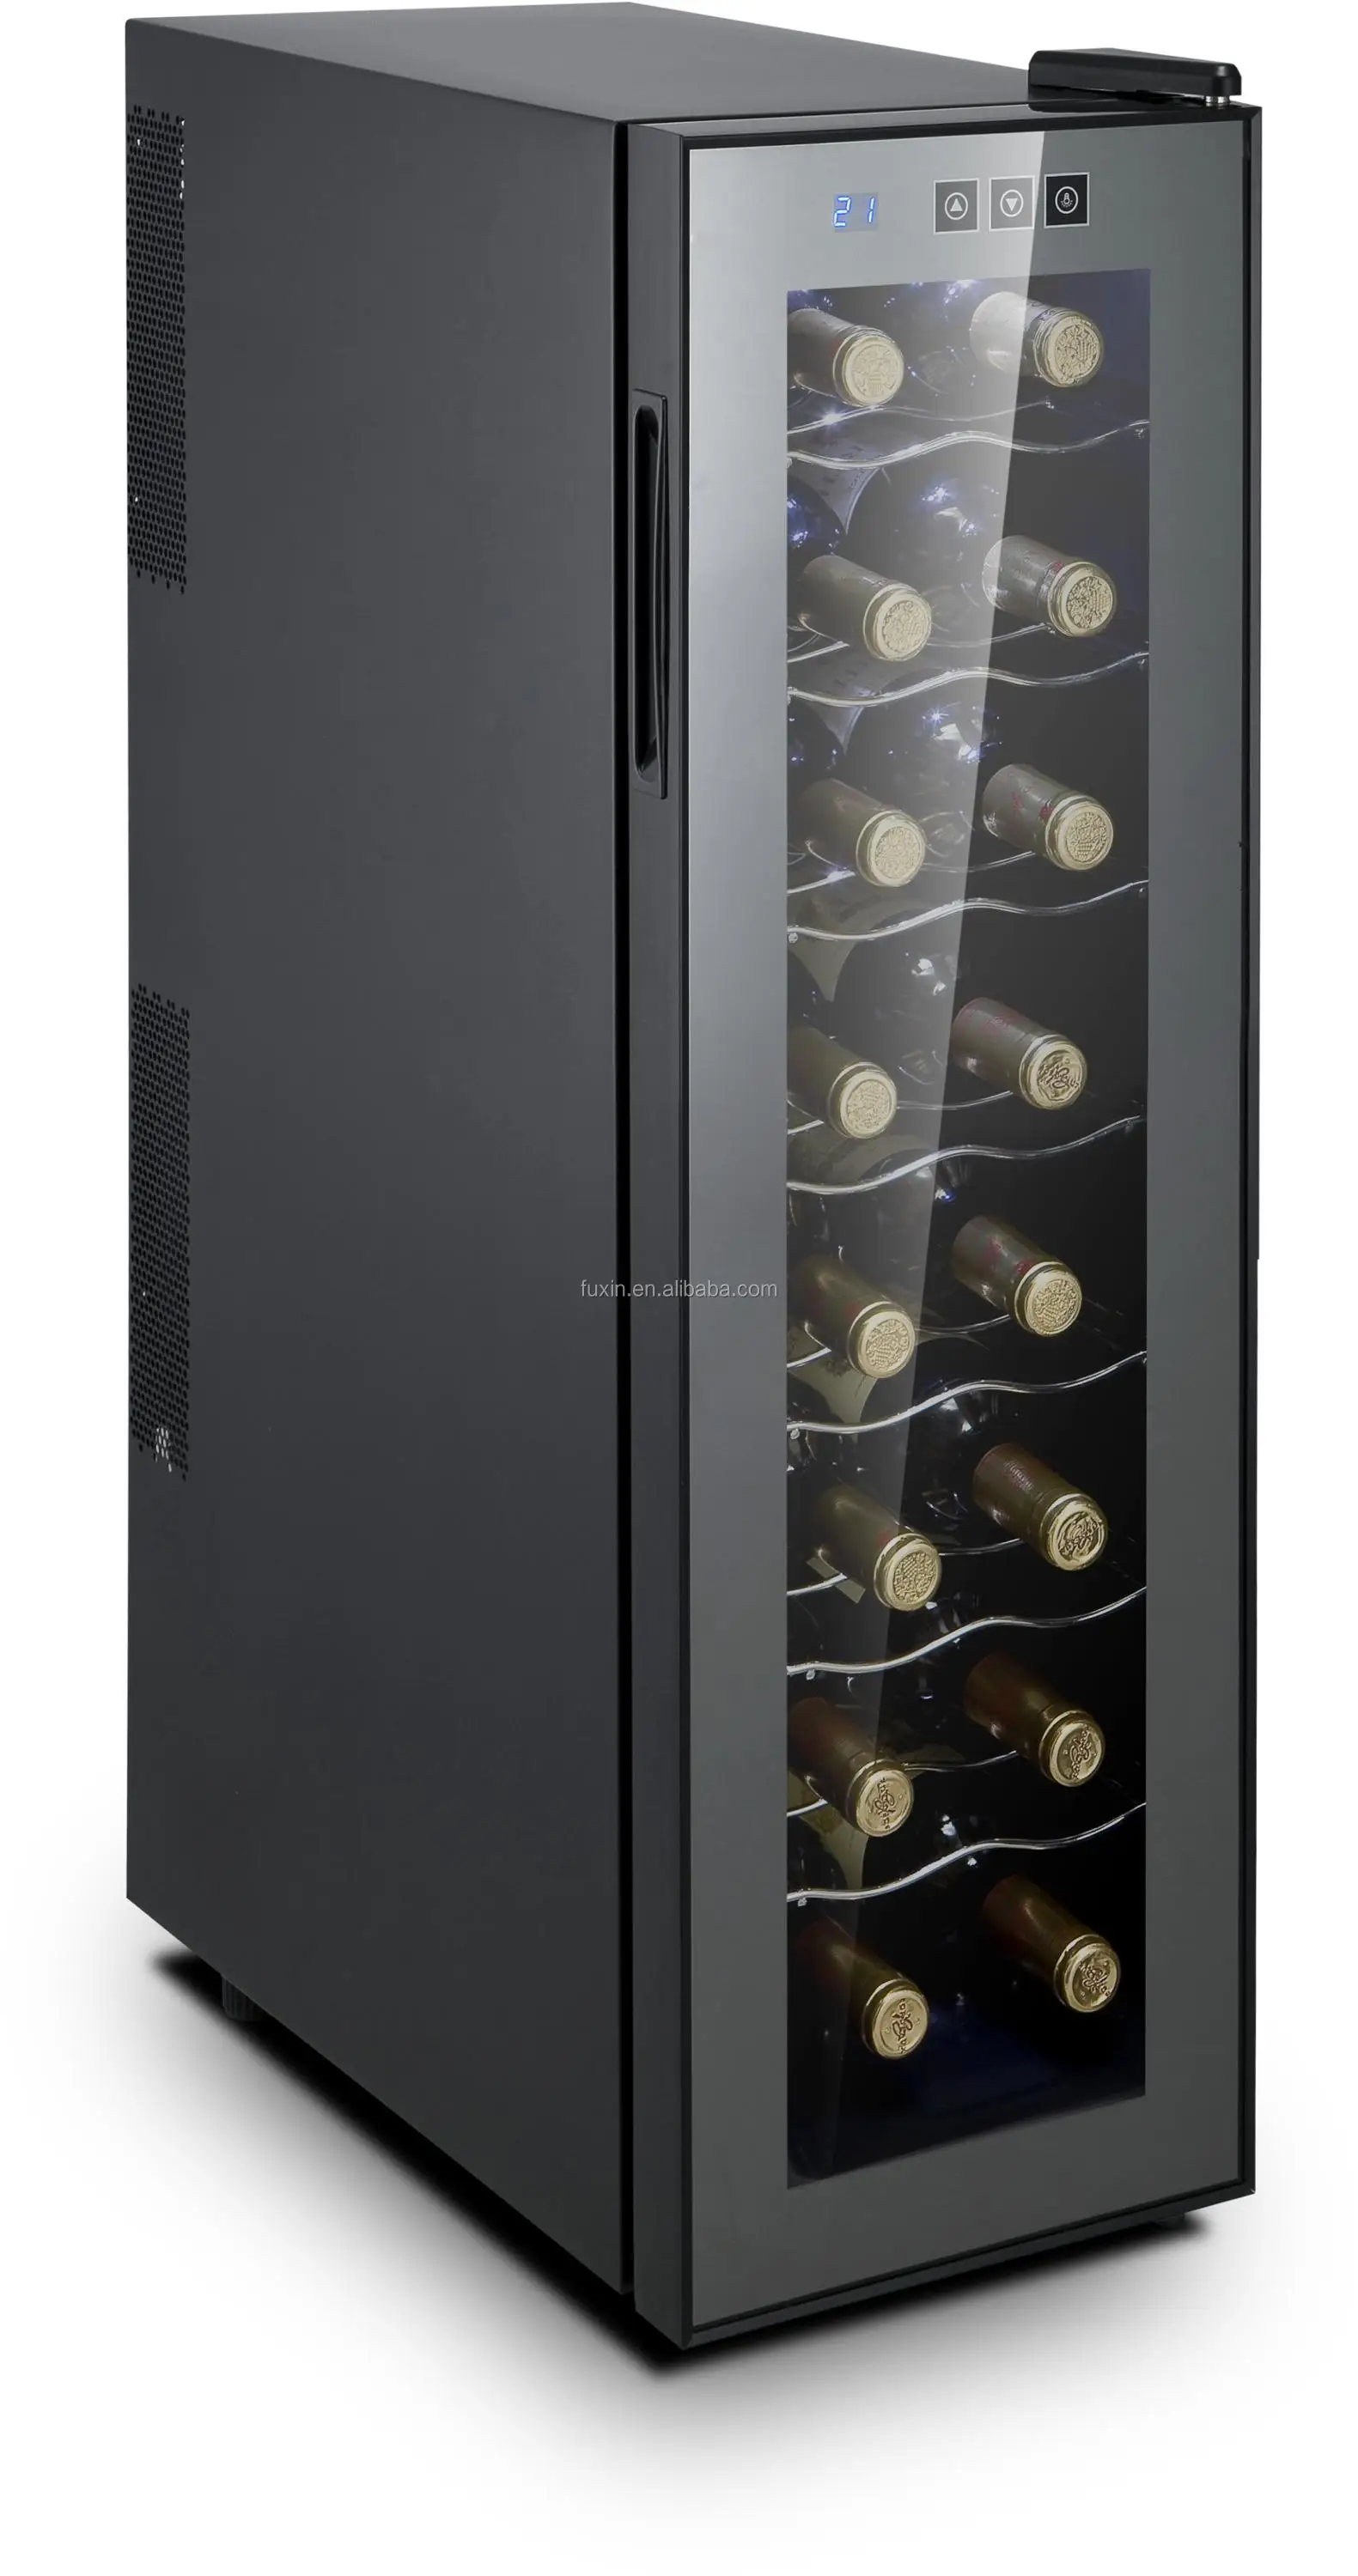 Fuxin Jc 53afw Electronic Wine Cabinet Glass Door Wine Cooler